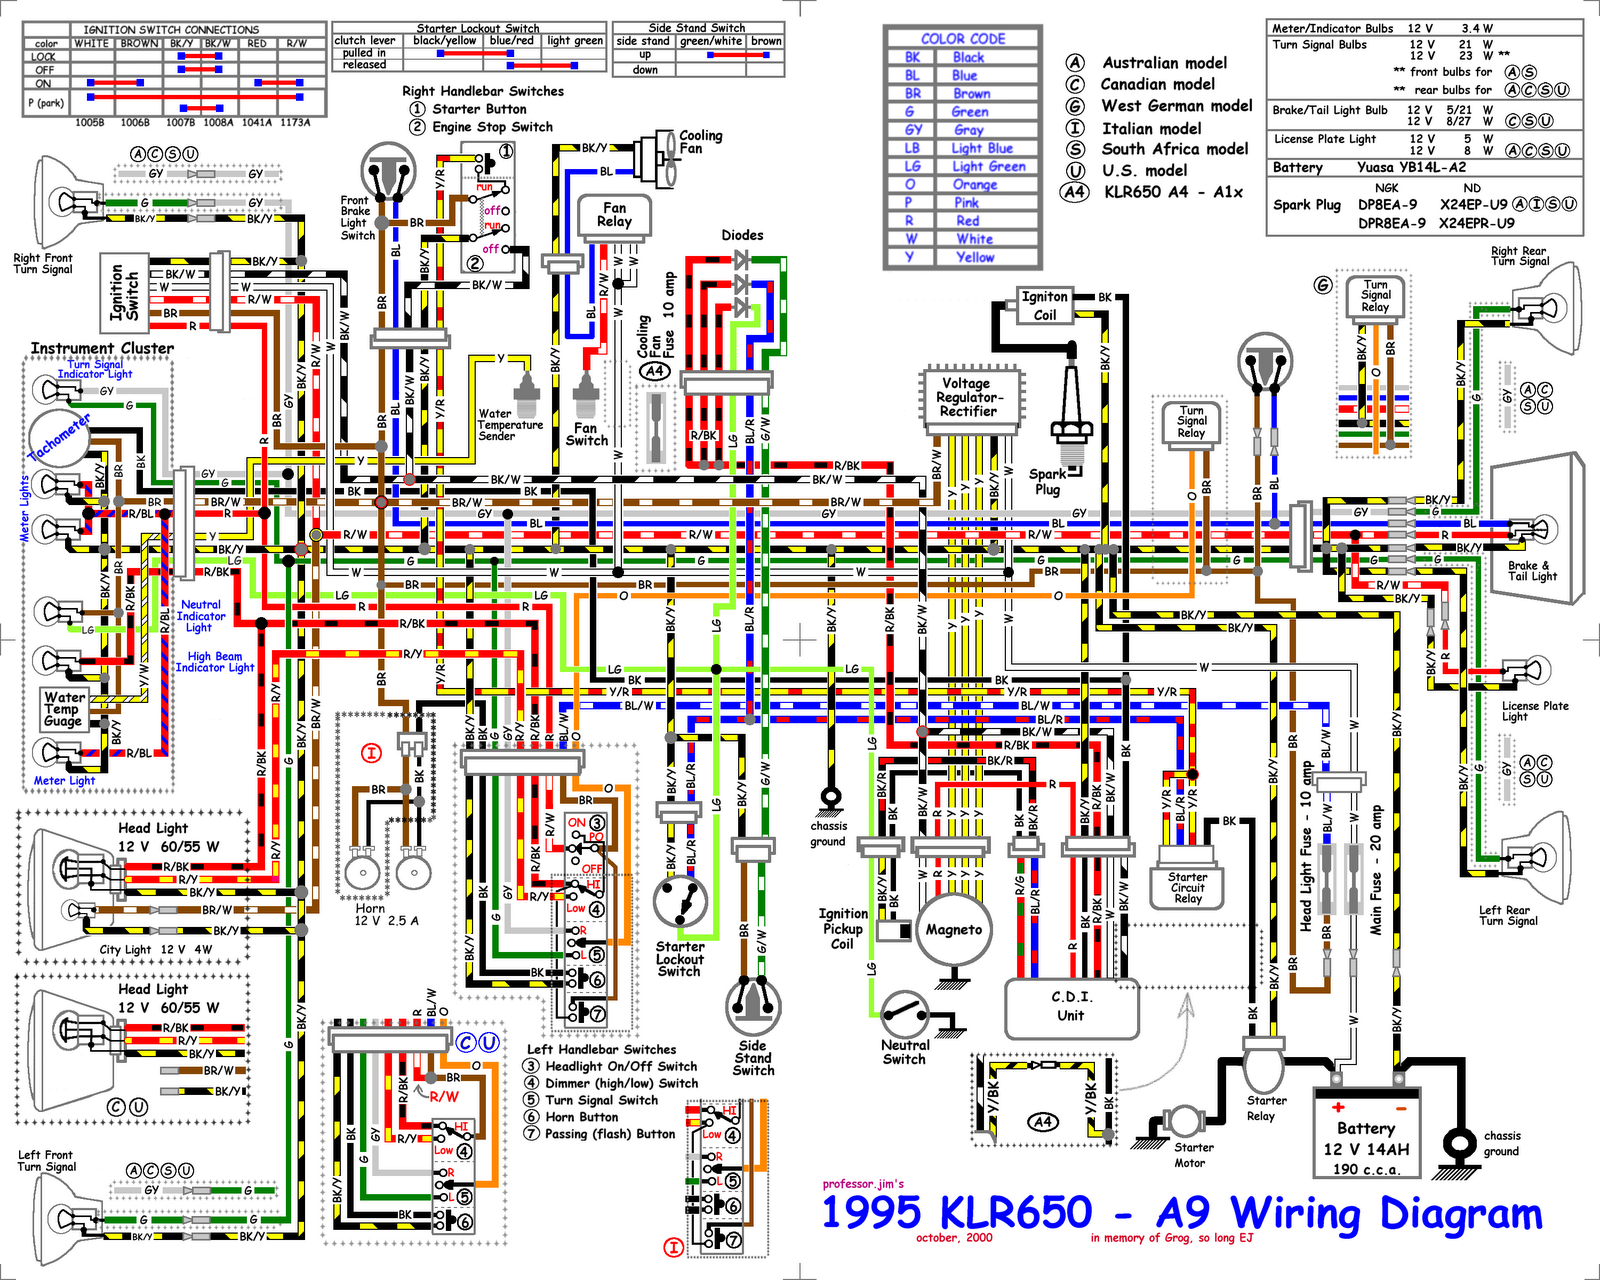 93 Ford escort radio wiring diagram free